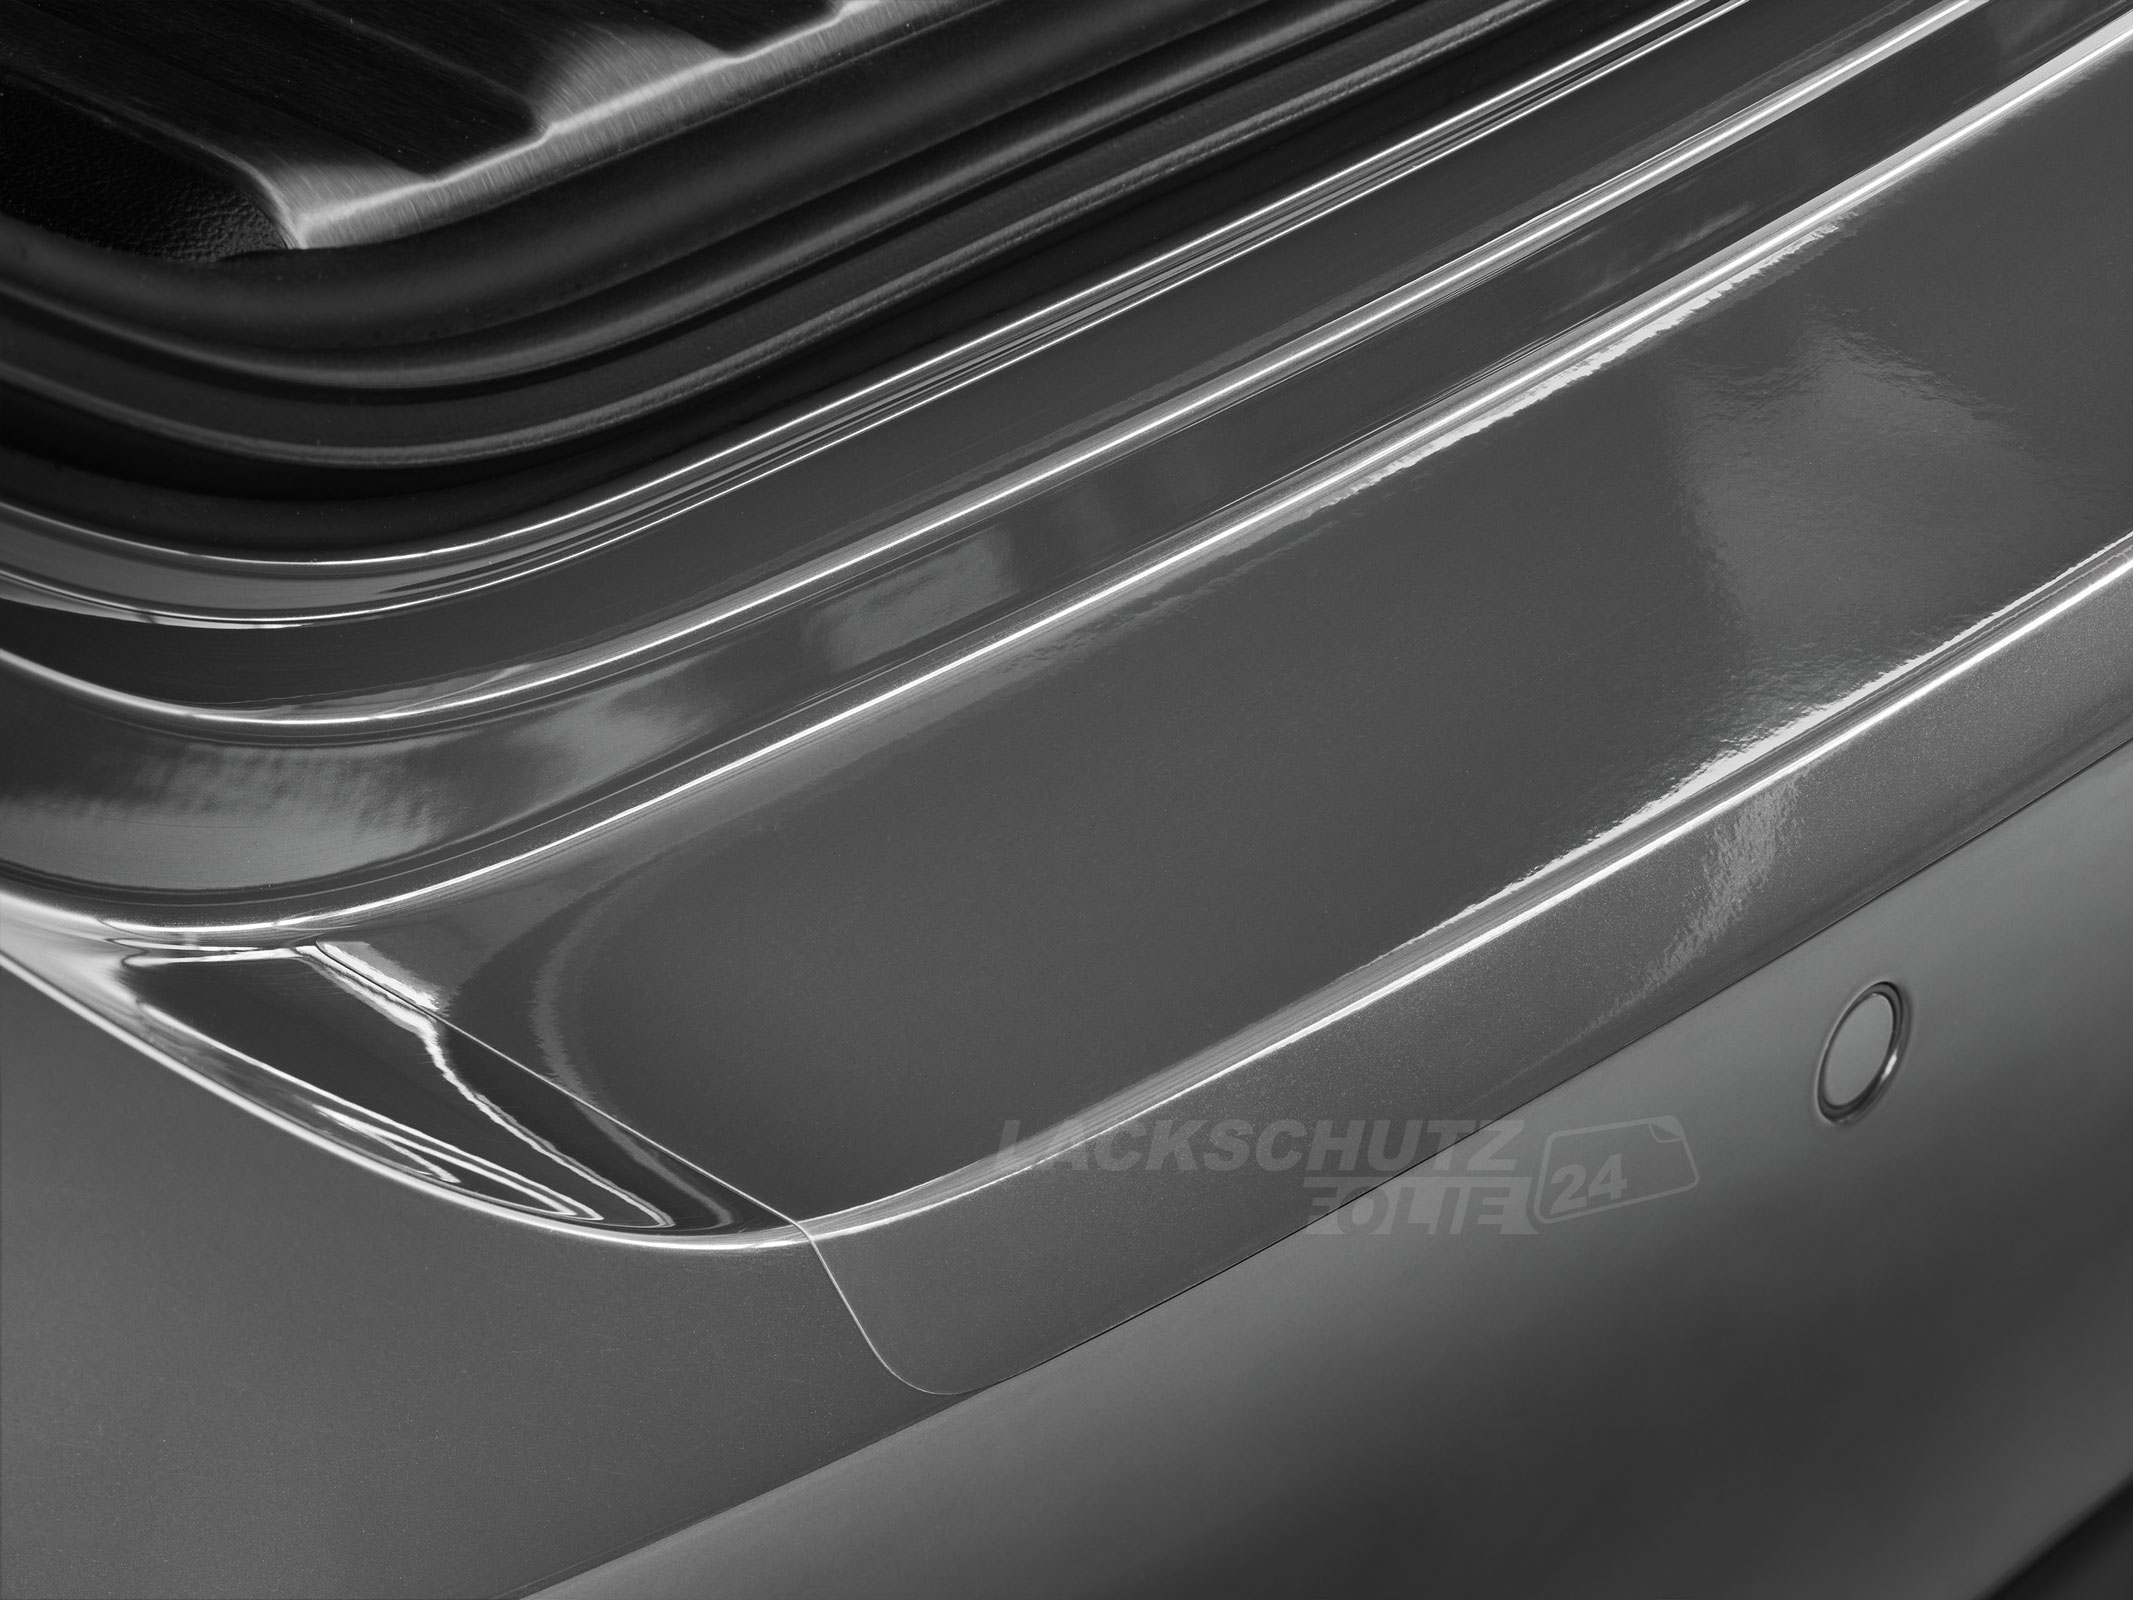 Ladekantenschutzfolie - Transparent Glatt Hochglänzend 240 µm stark für Honda Civic 9. Generation, BJ 2012-2015